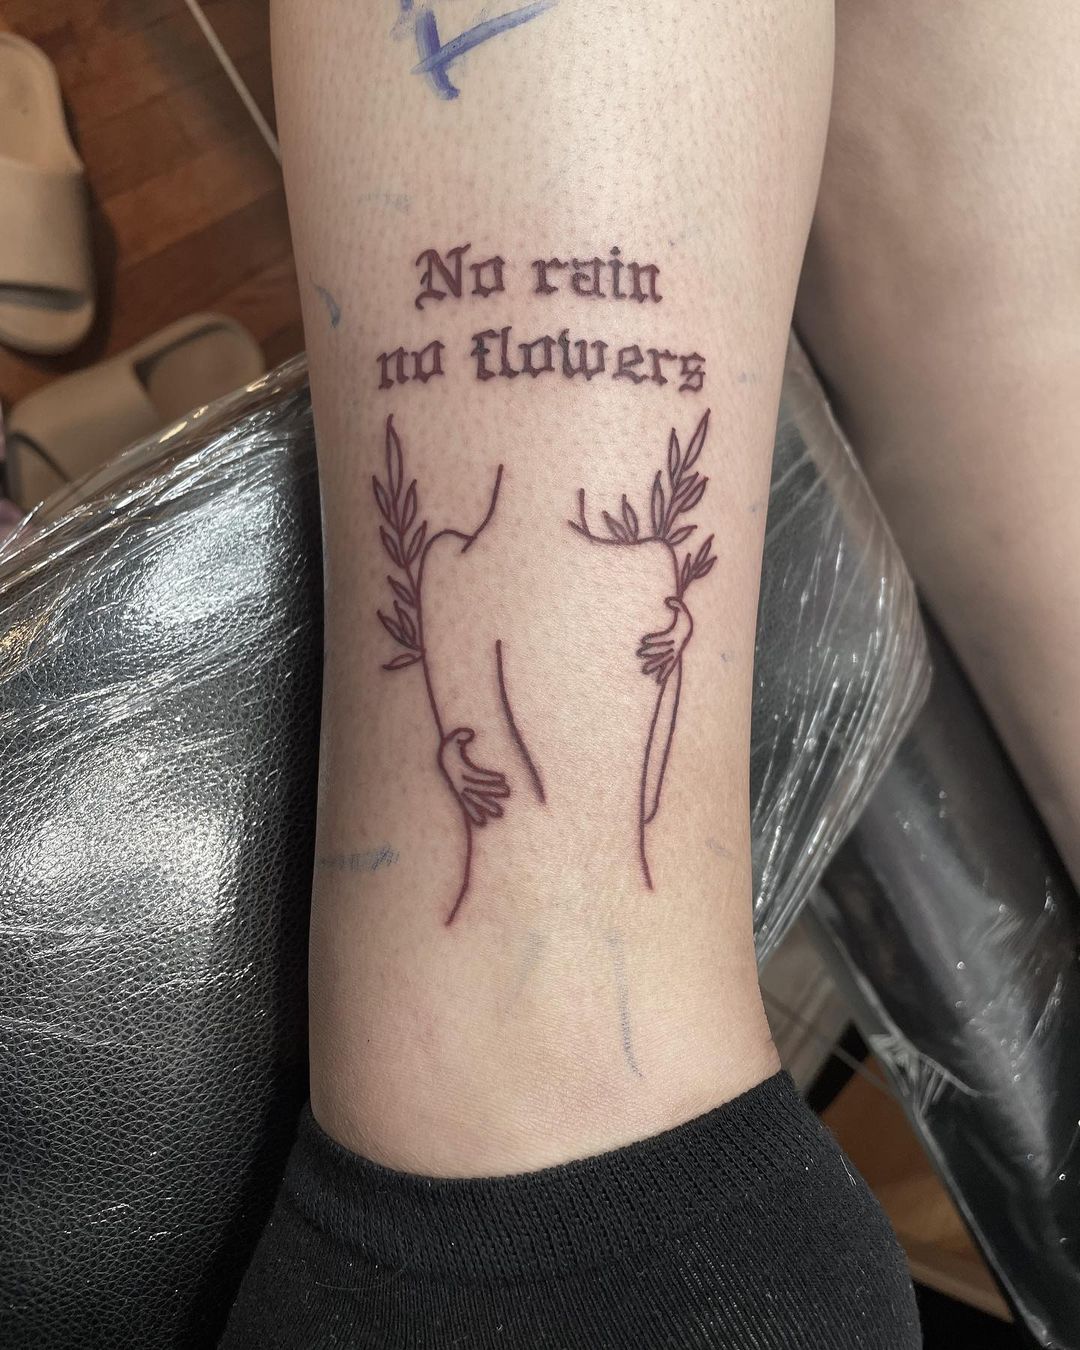 31 of the best No Rain No Flowers Tattoos!